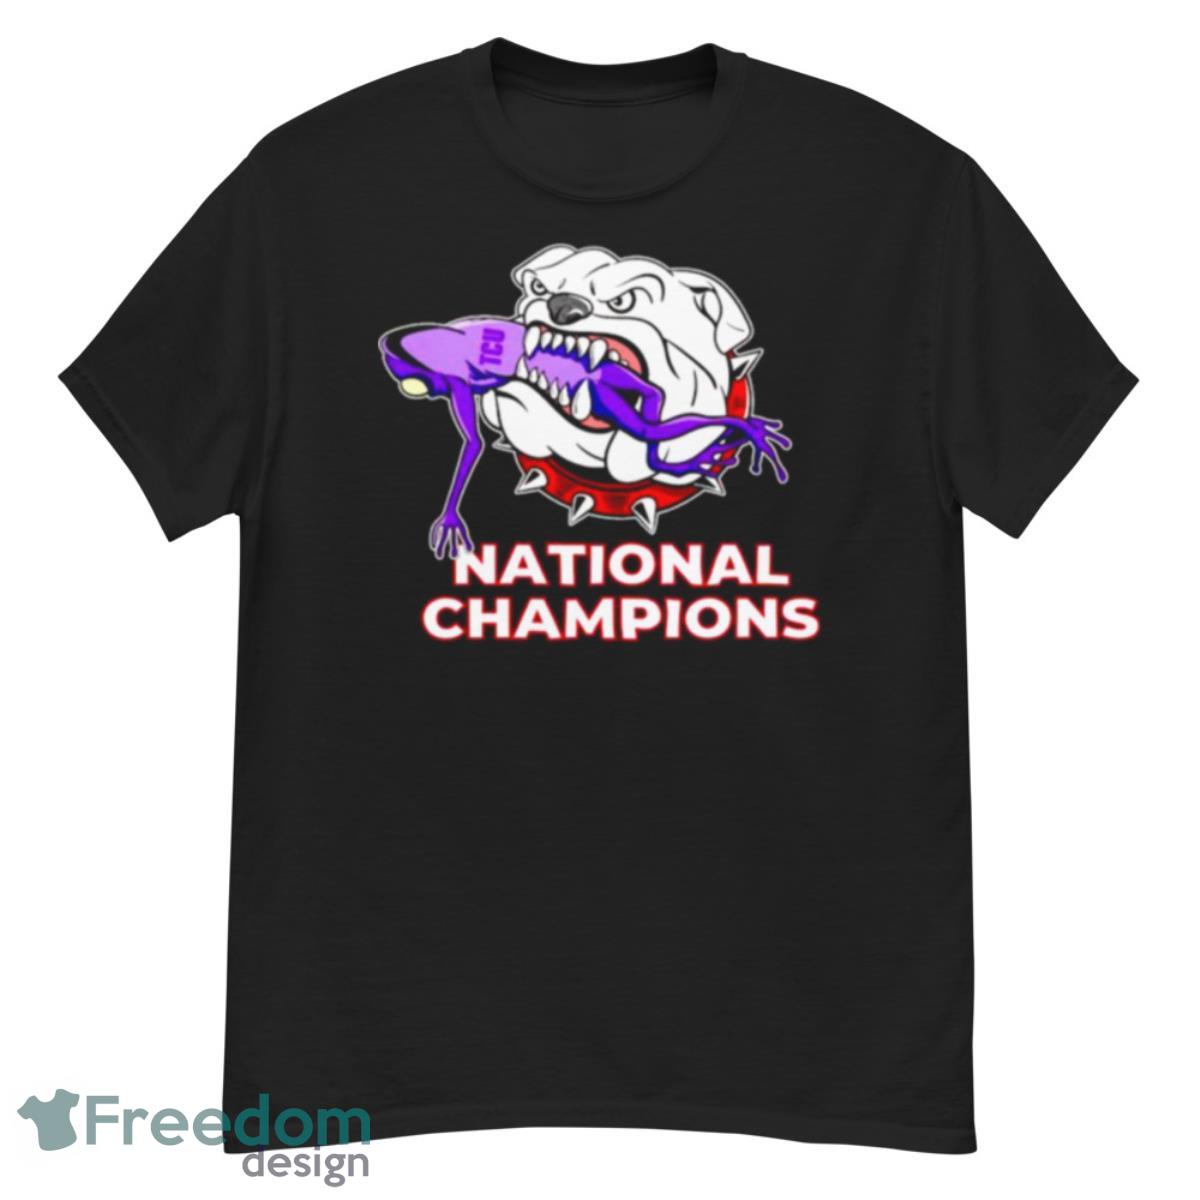 Georgia Bulldogs defeat TCU Horned Frogs national champions shirt - G500 Men’s Classic T-Shirt